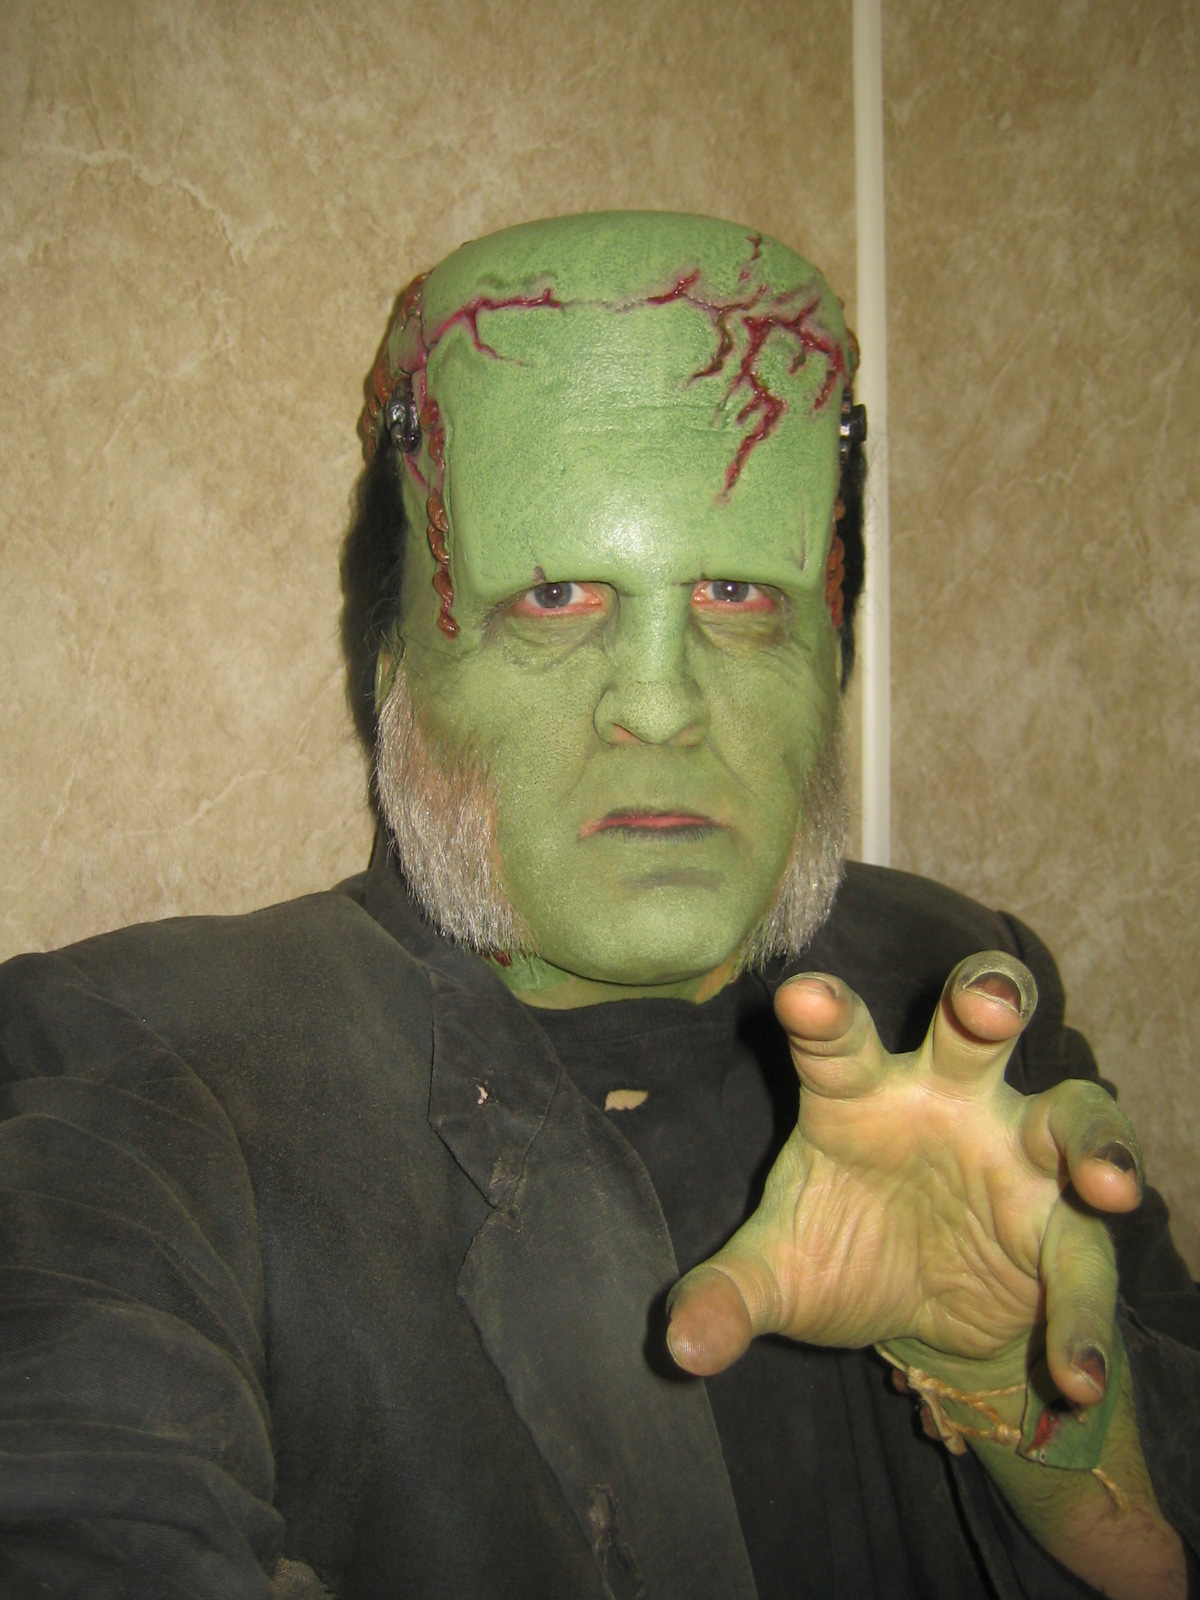 Daniel Roebuck as Lou Martini playing Frankenstein in Rob Zombie's Halloween 2